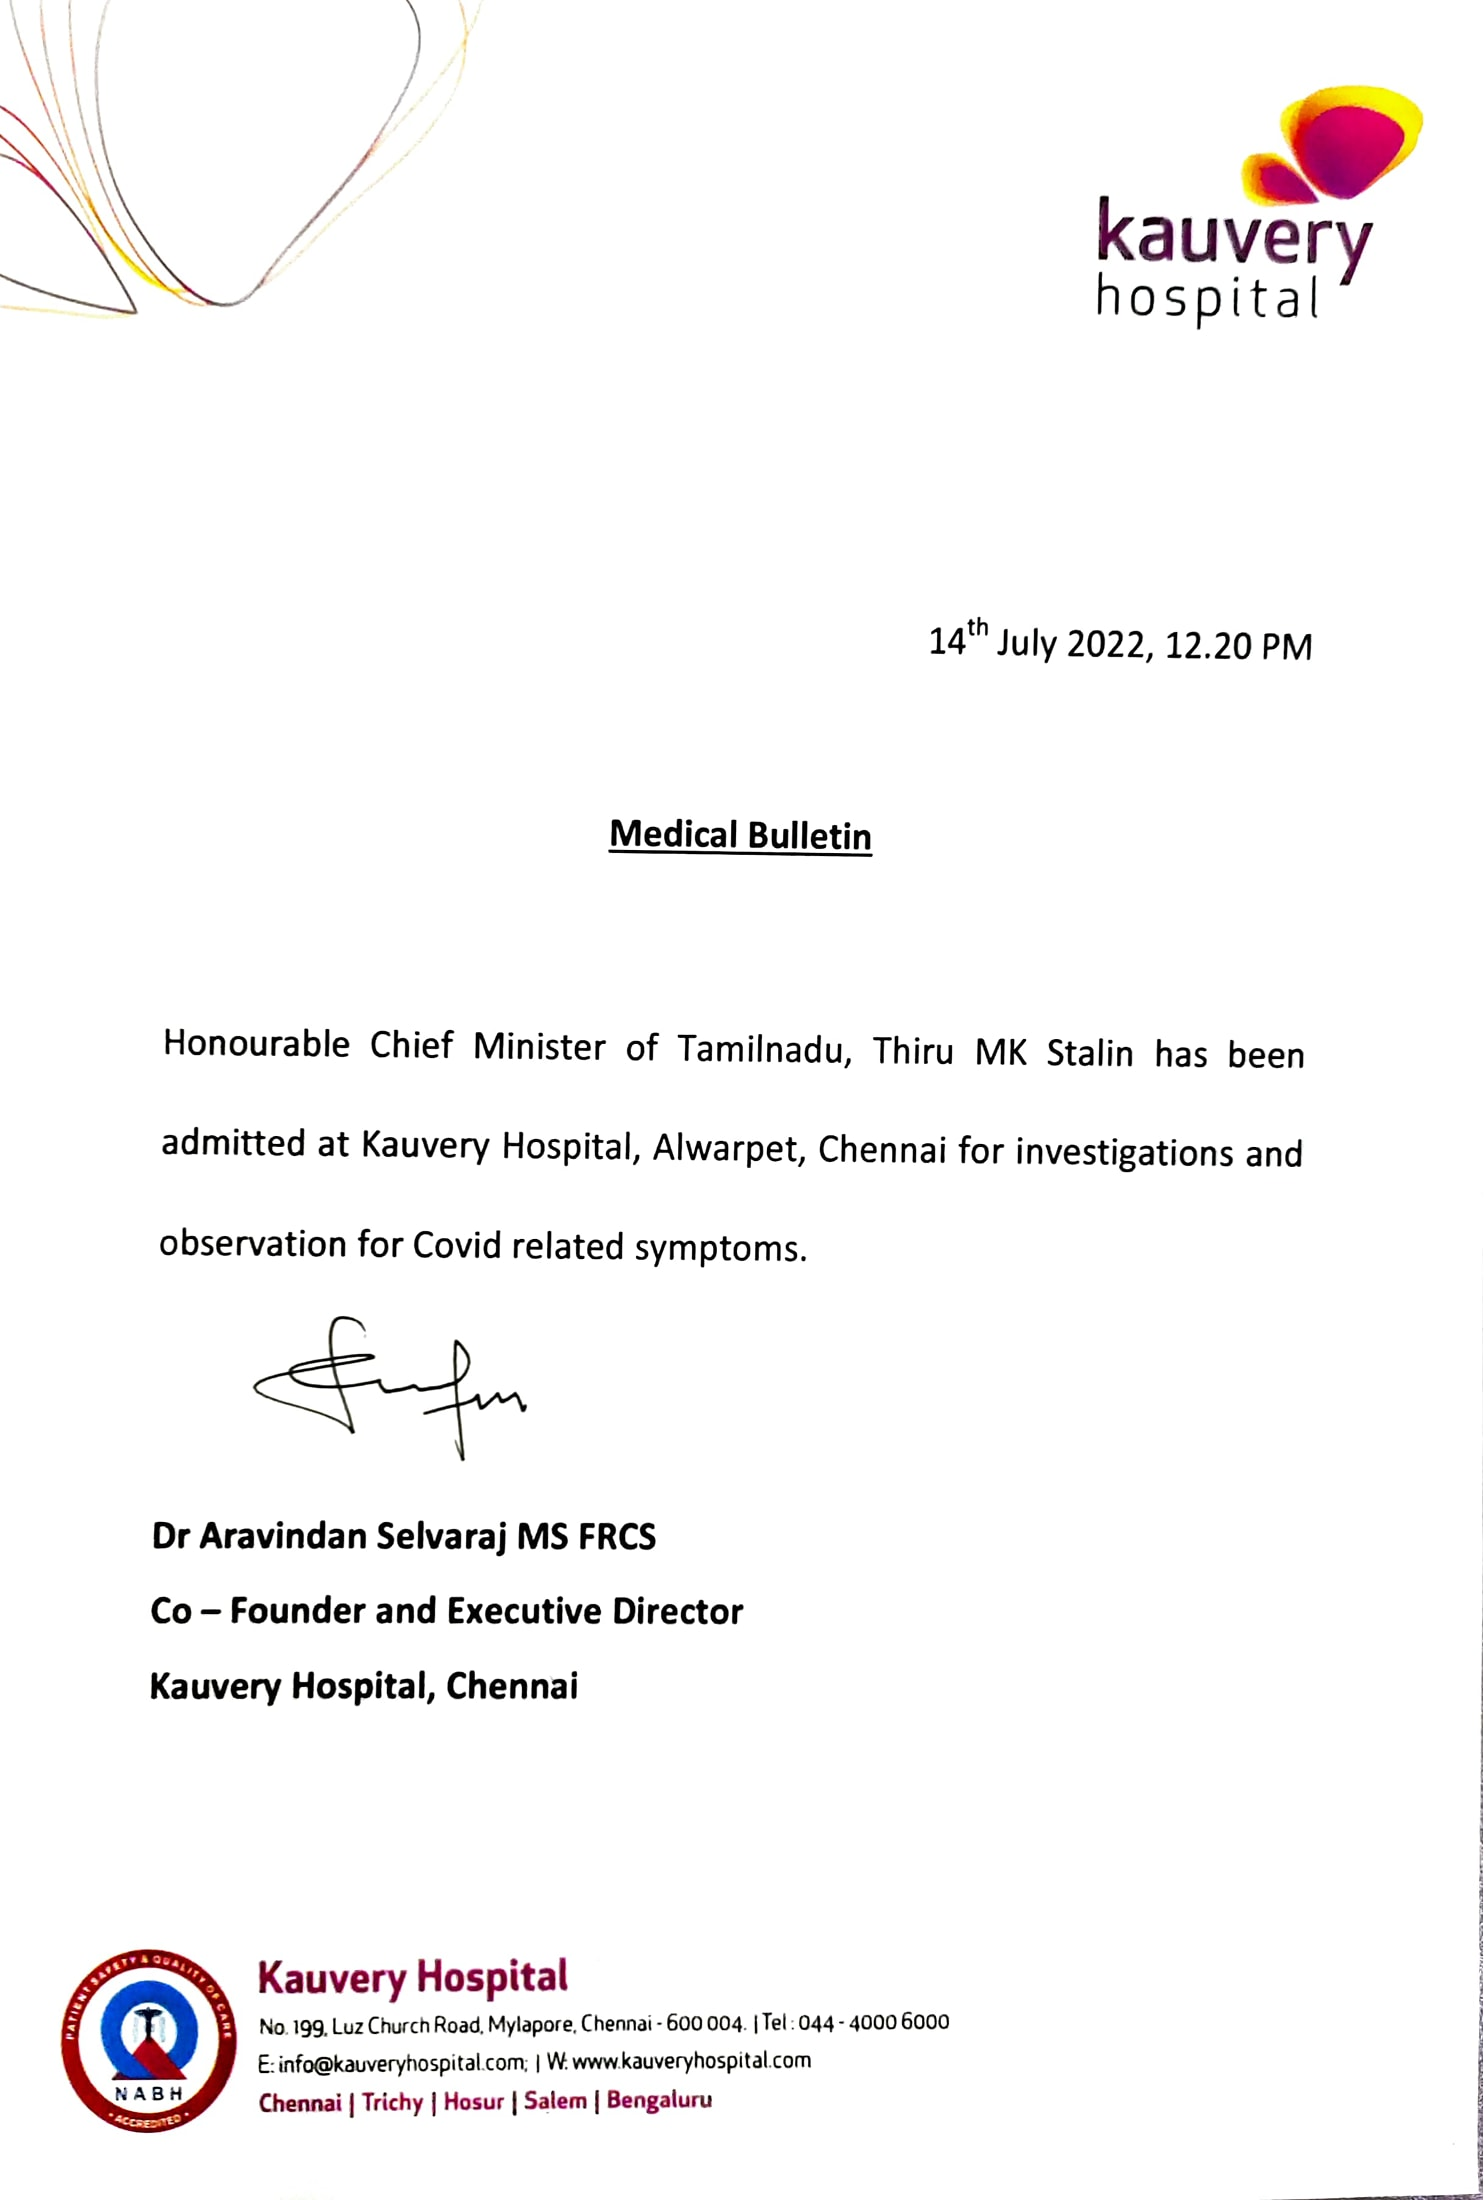 Tamilnadu cm Mk Stalin admitted in kauvery hospital